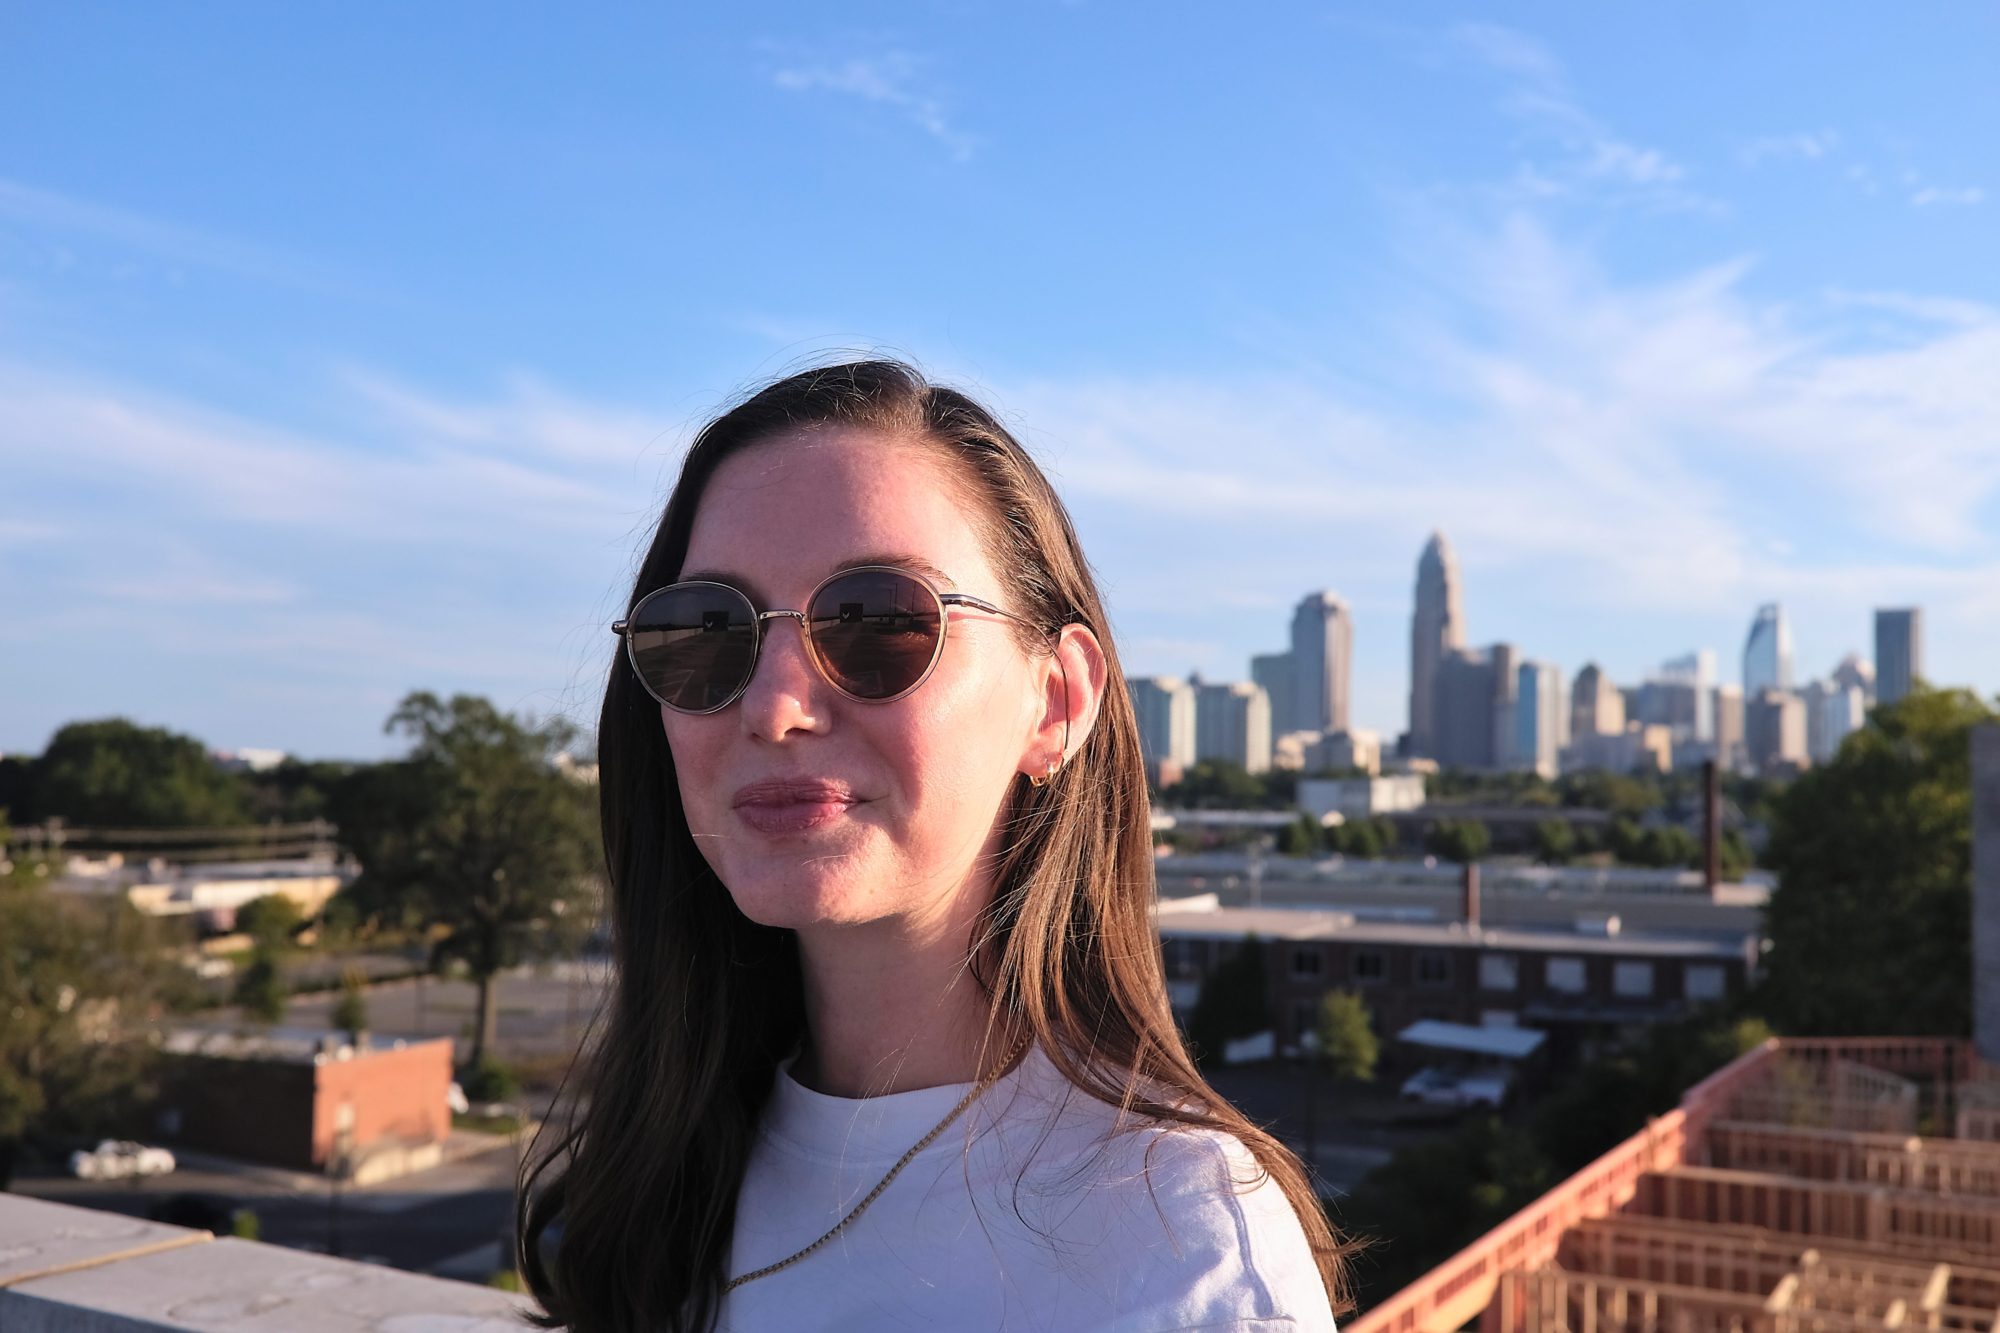 Alyssa wears a pair of Sunski's Baia sunglasses in front of the Charlotte skyline